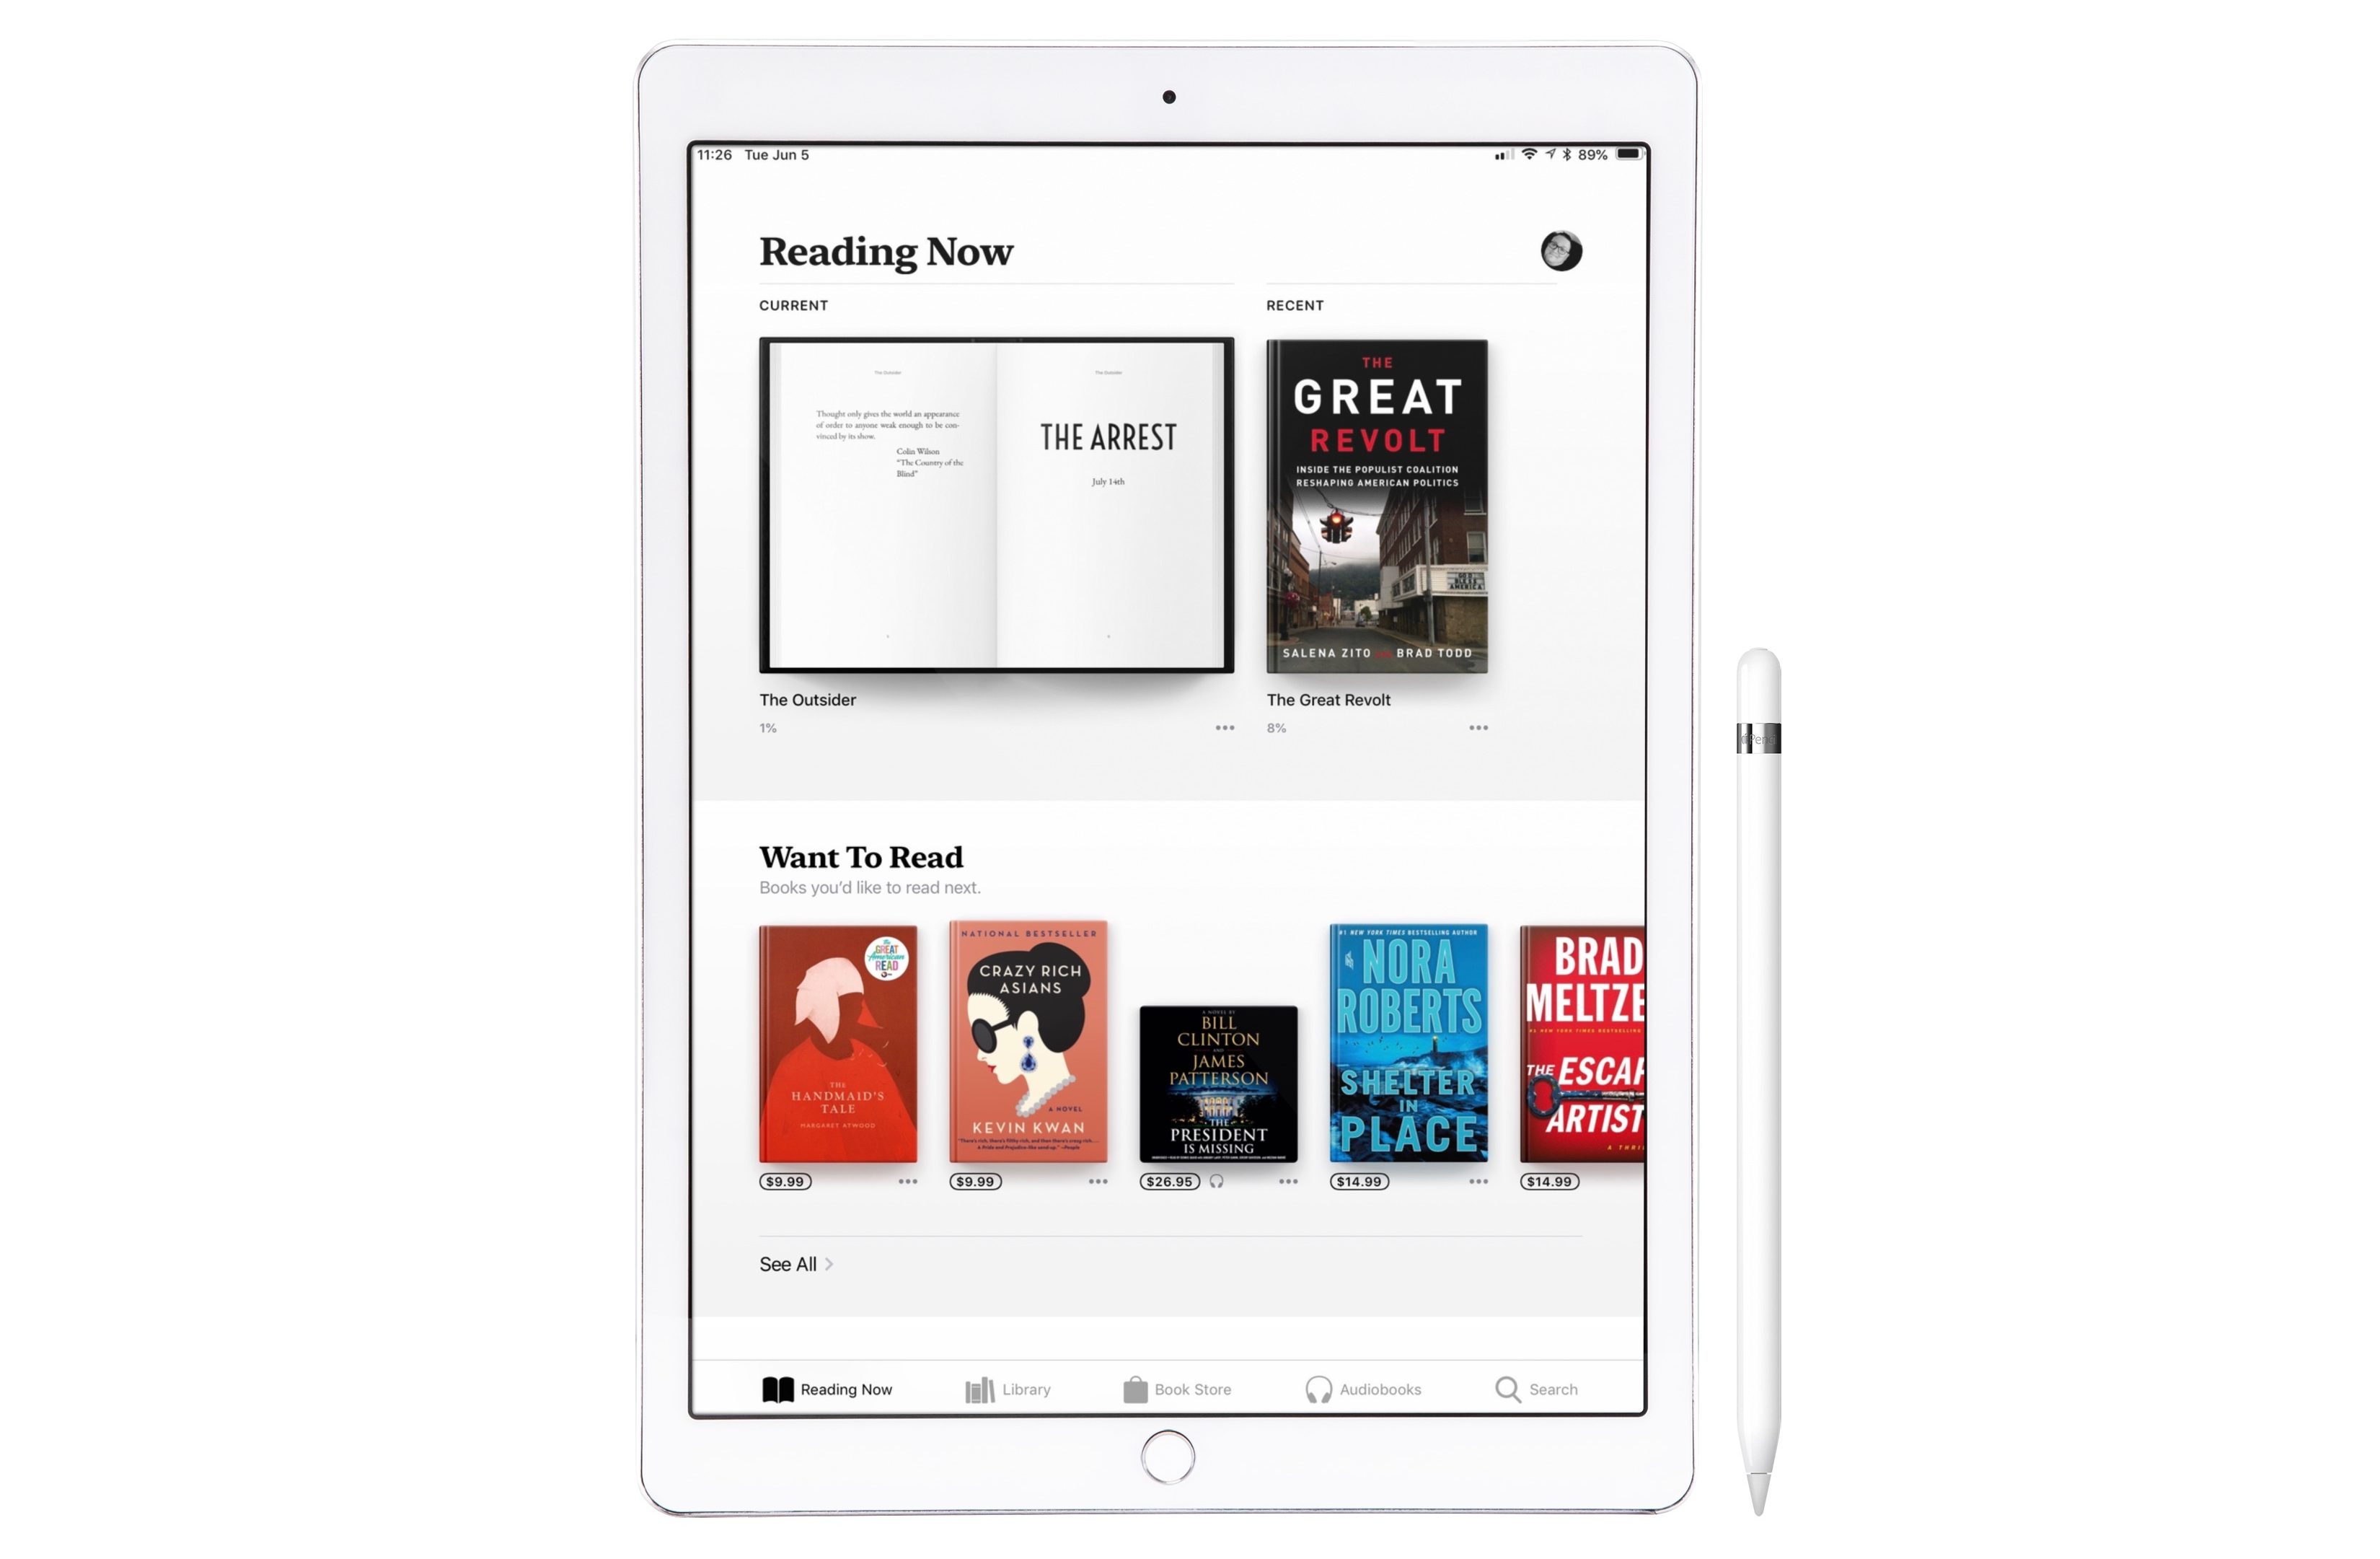 Missing Audiobook In Mac Os Books App